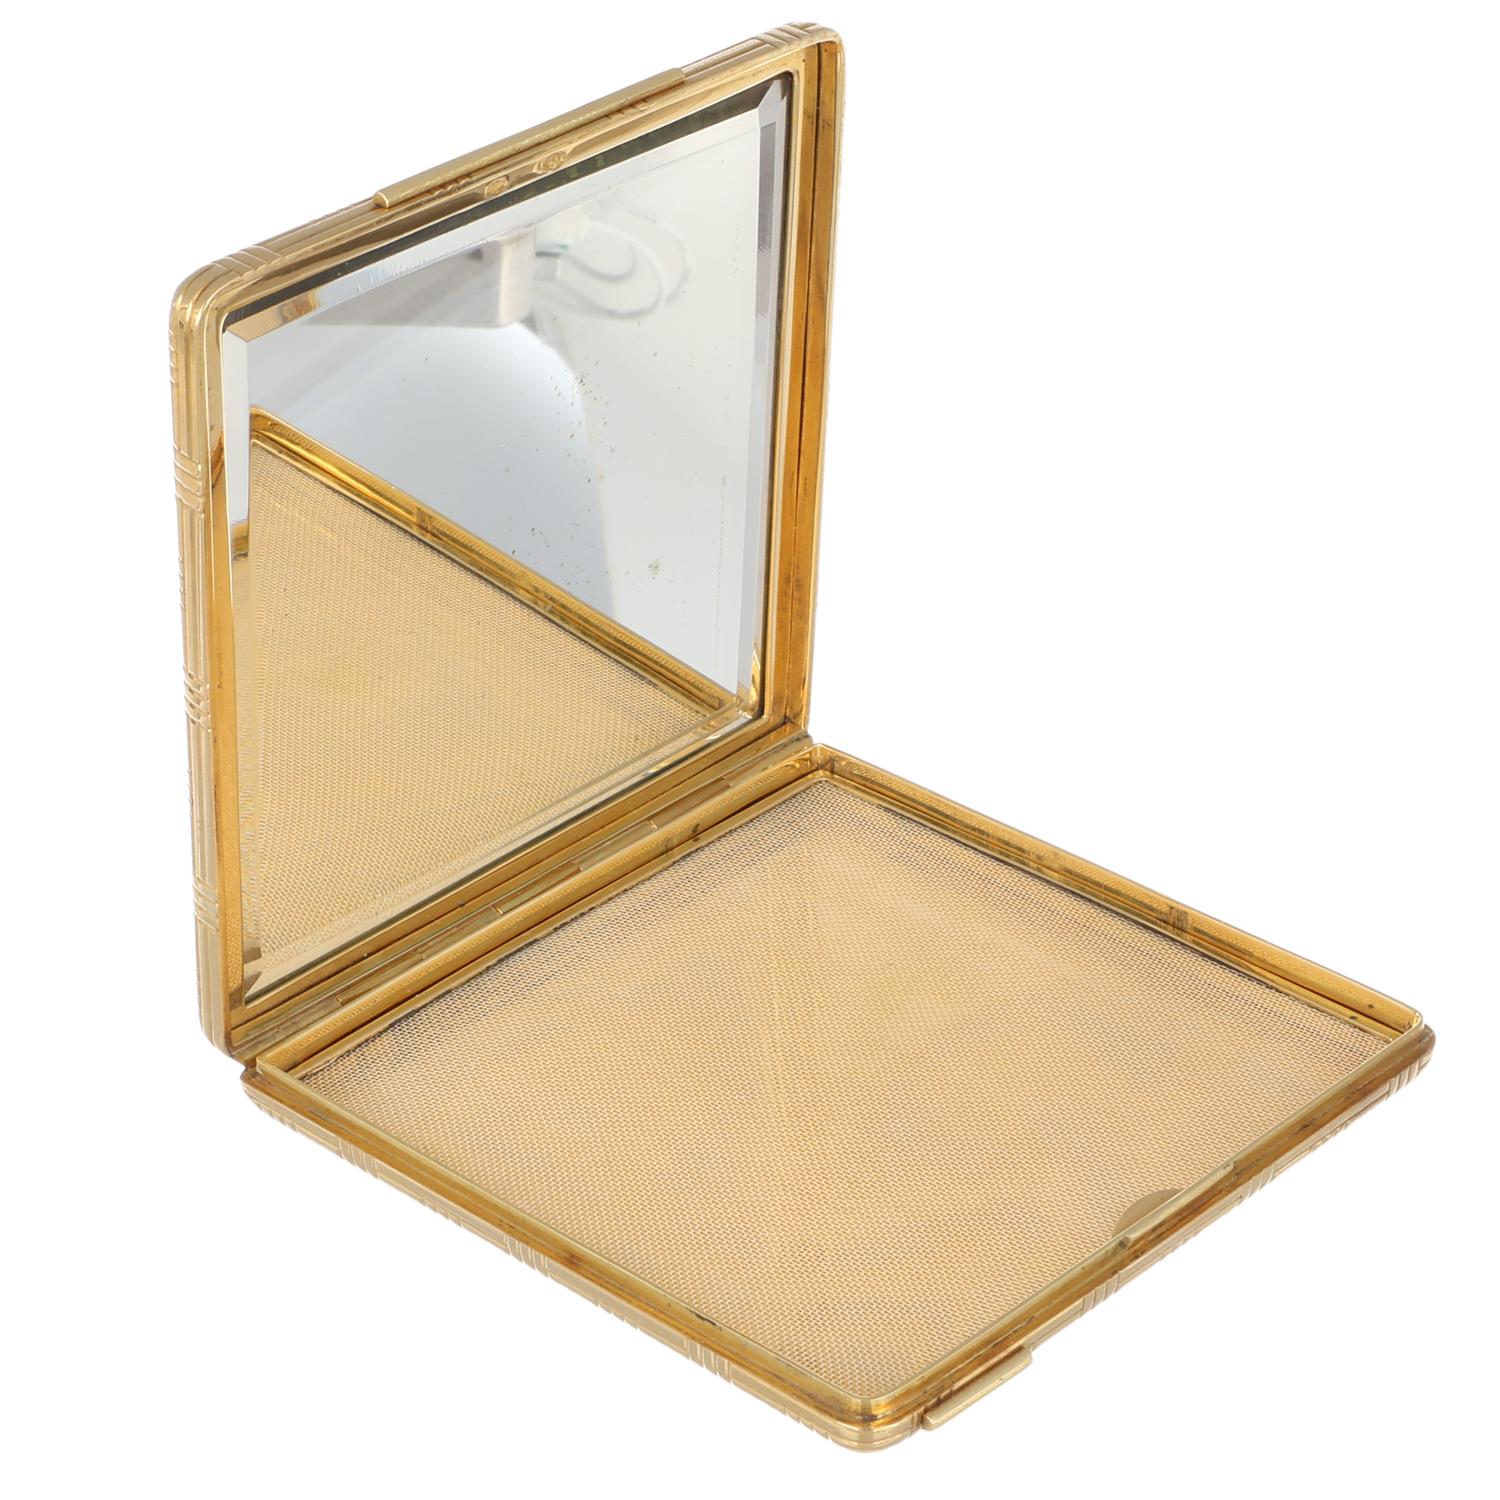 18Kt Gold Seltene kompakte Puderdose - Made in Italy 1970 circa - Geometrisches Muster im Angebot 1